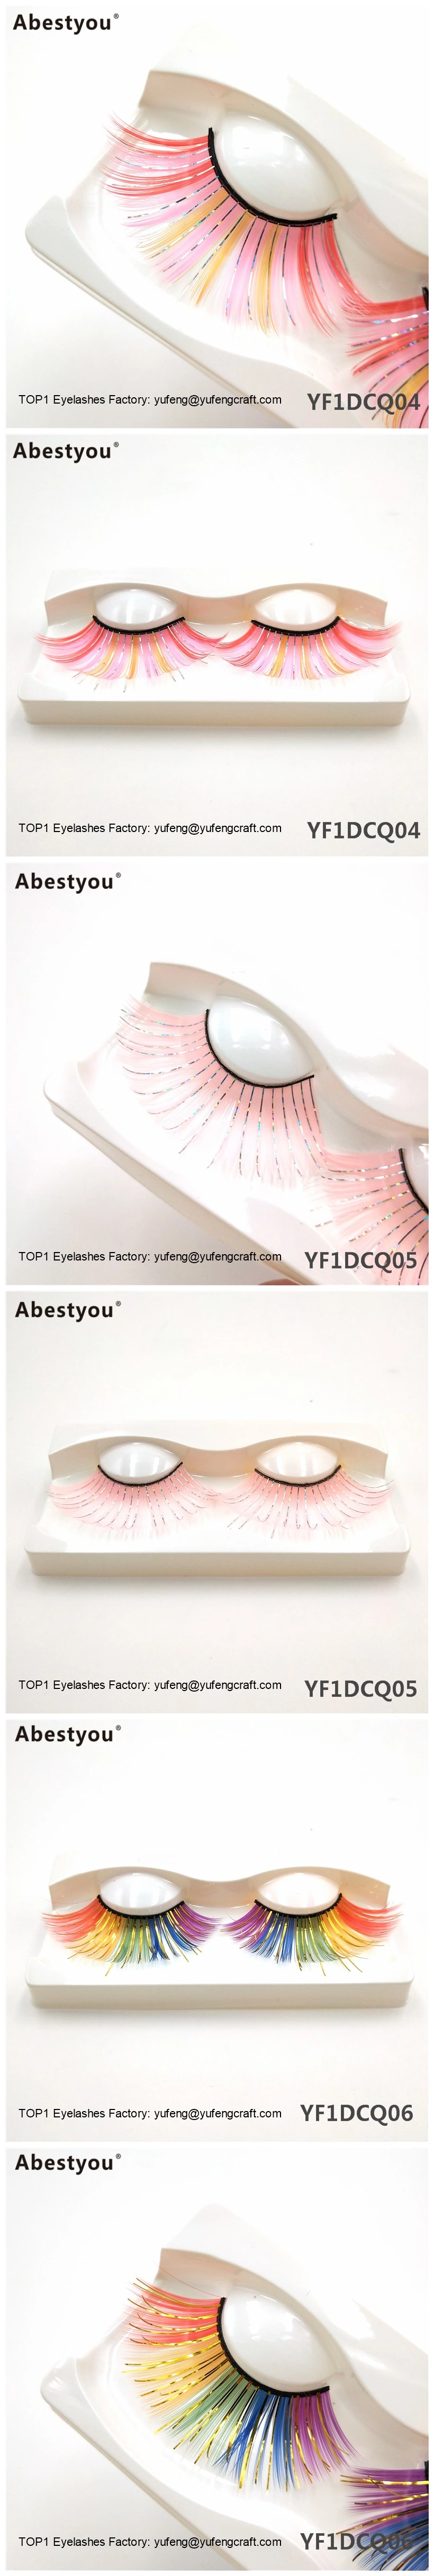 Abestyou 1pair 30mm Length Colorful Eyelashes